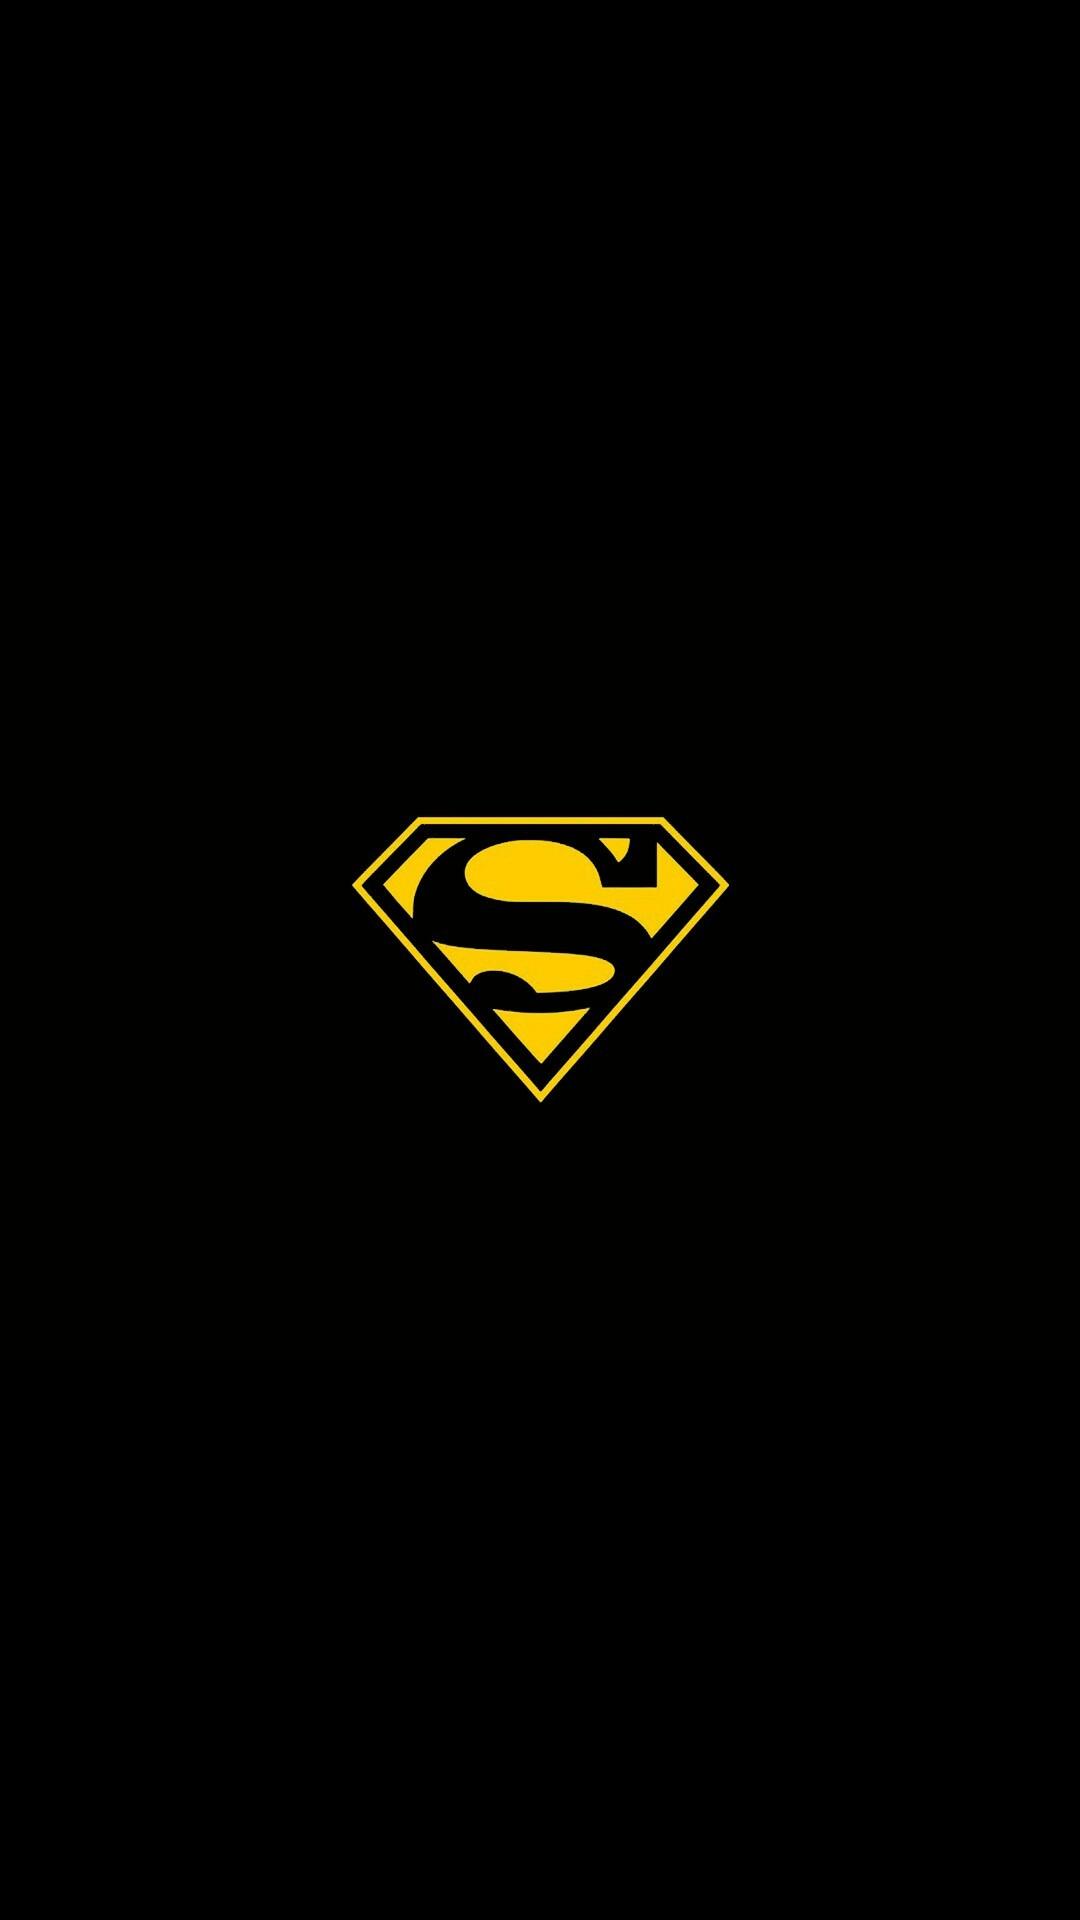 Superheroes Logos Wallpaper (the best image in 2018)